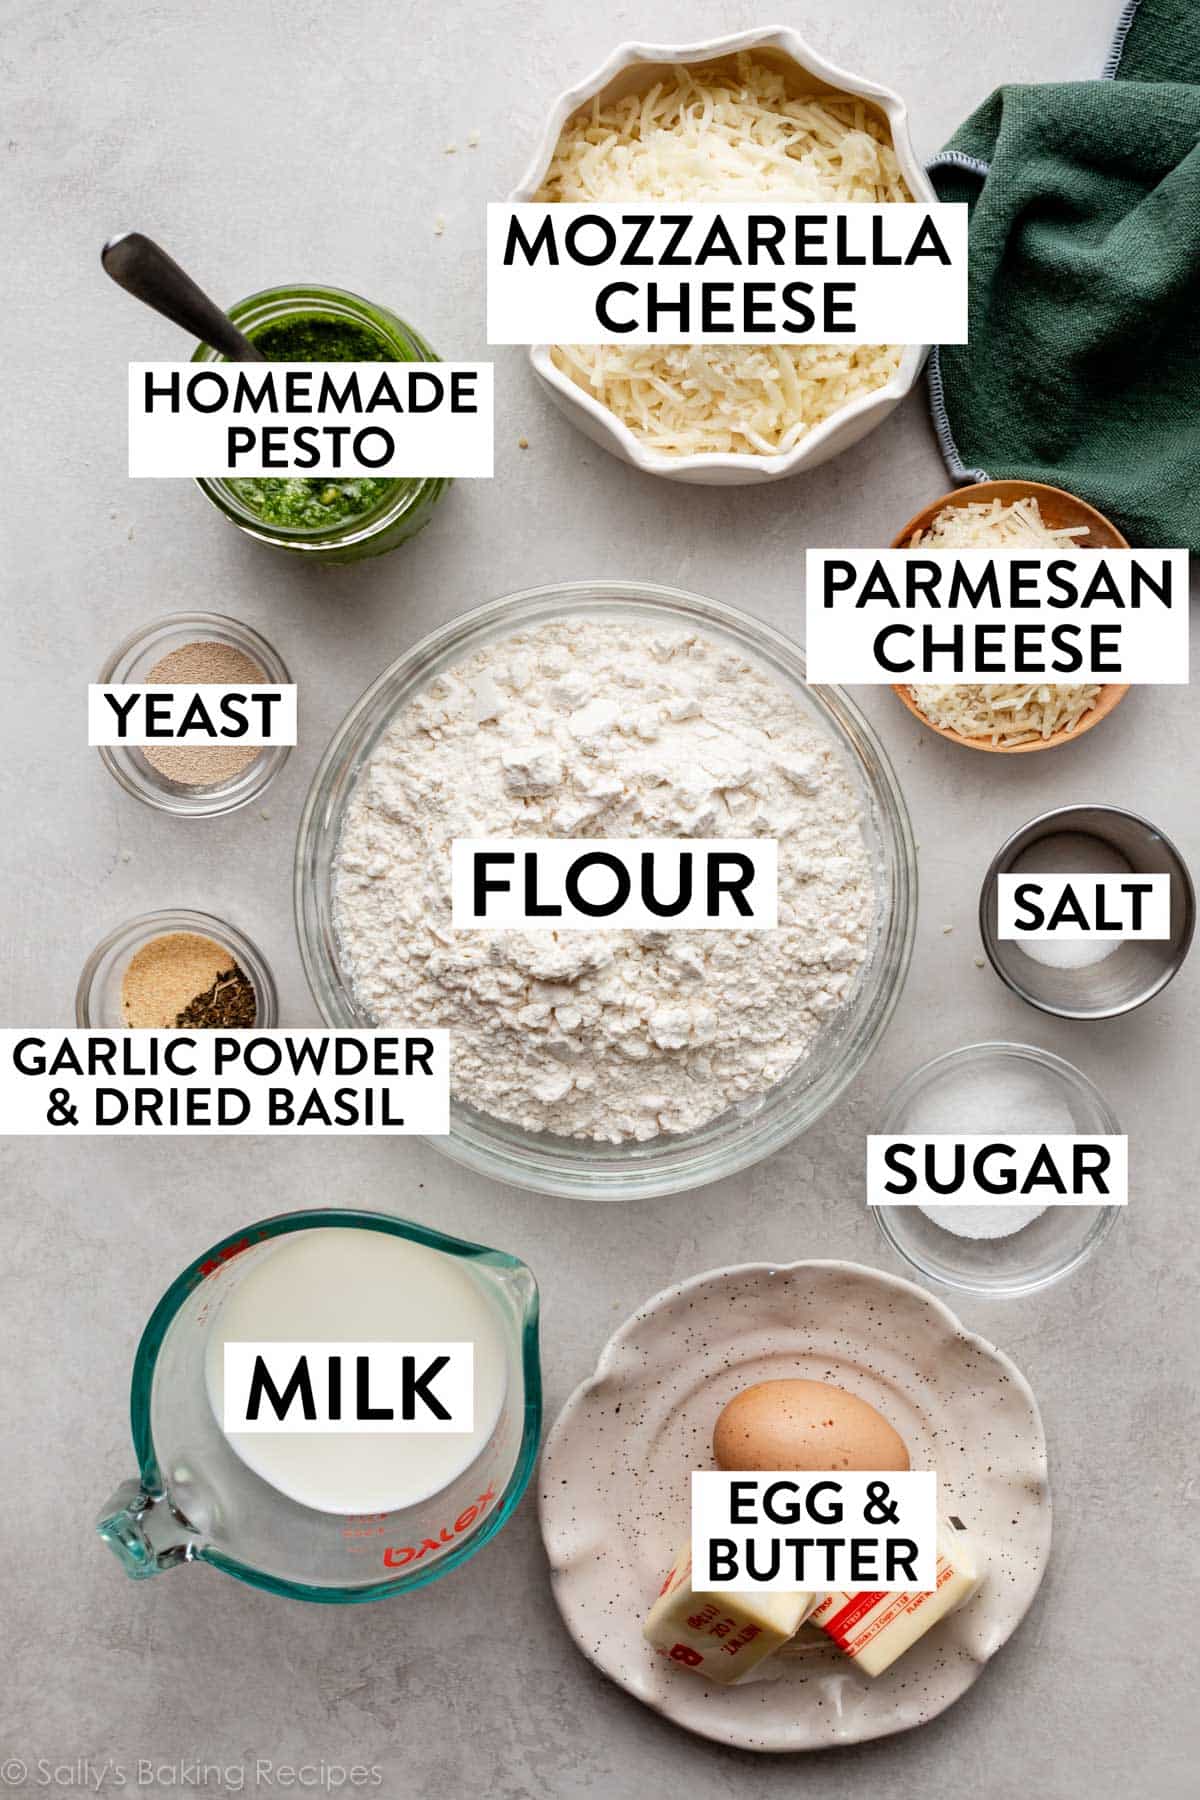 ingredients in bowls including flour, mozzarella cheese, salt, egg, butter, milk, yeast, and garlic powder.